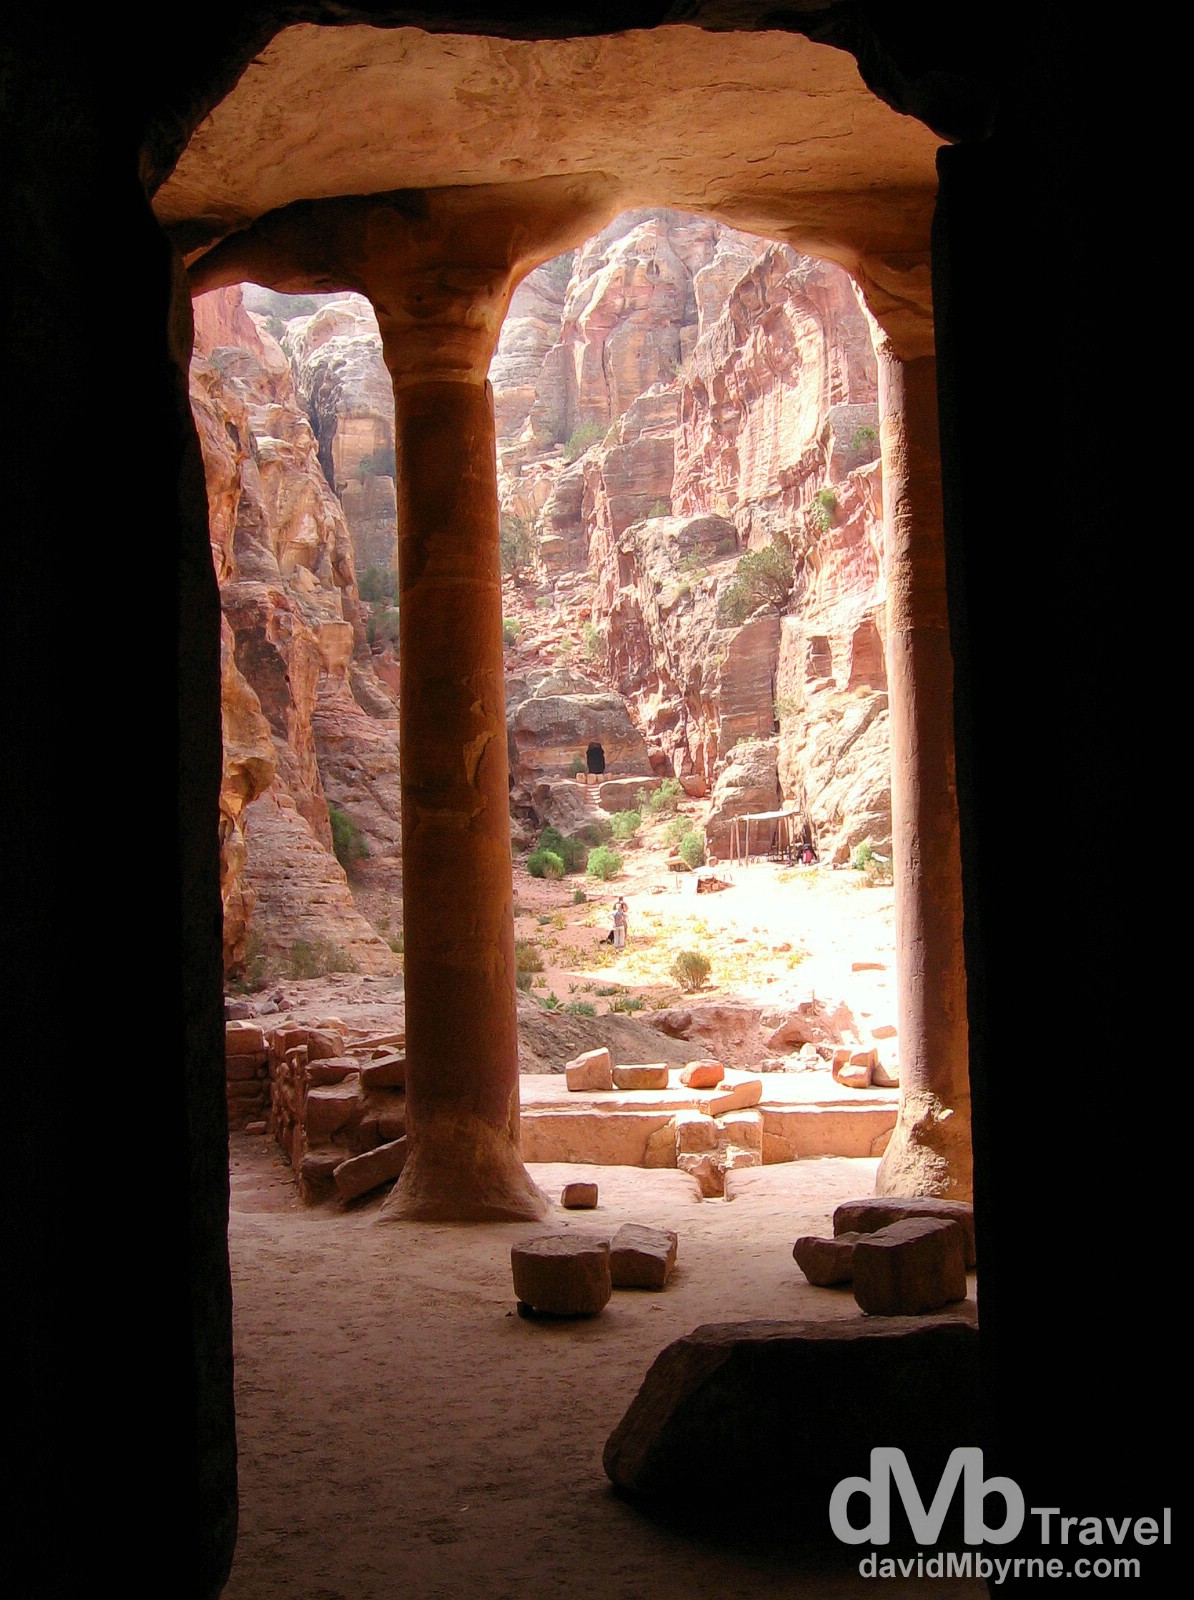 An abandoned building in Petra, Jordan. April 27, 2008.